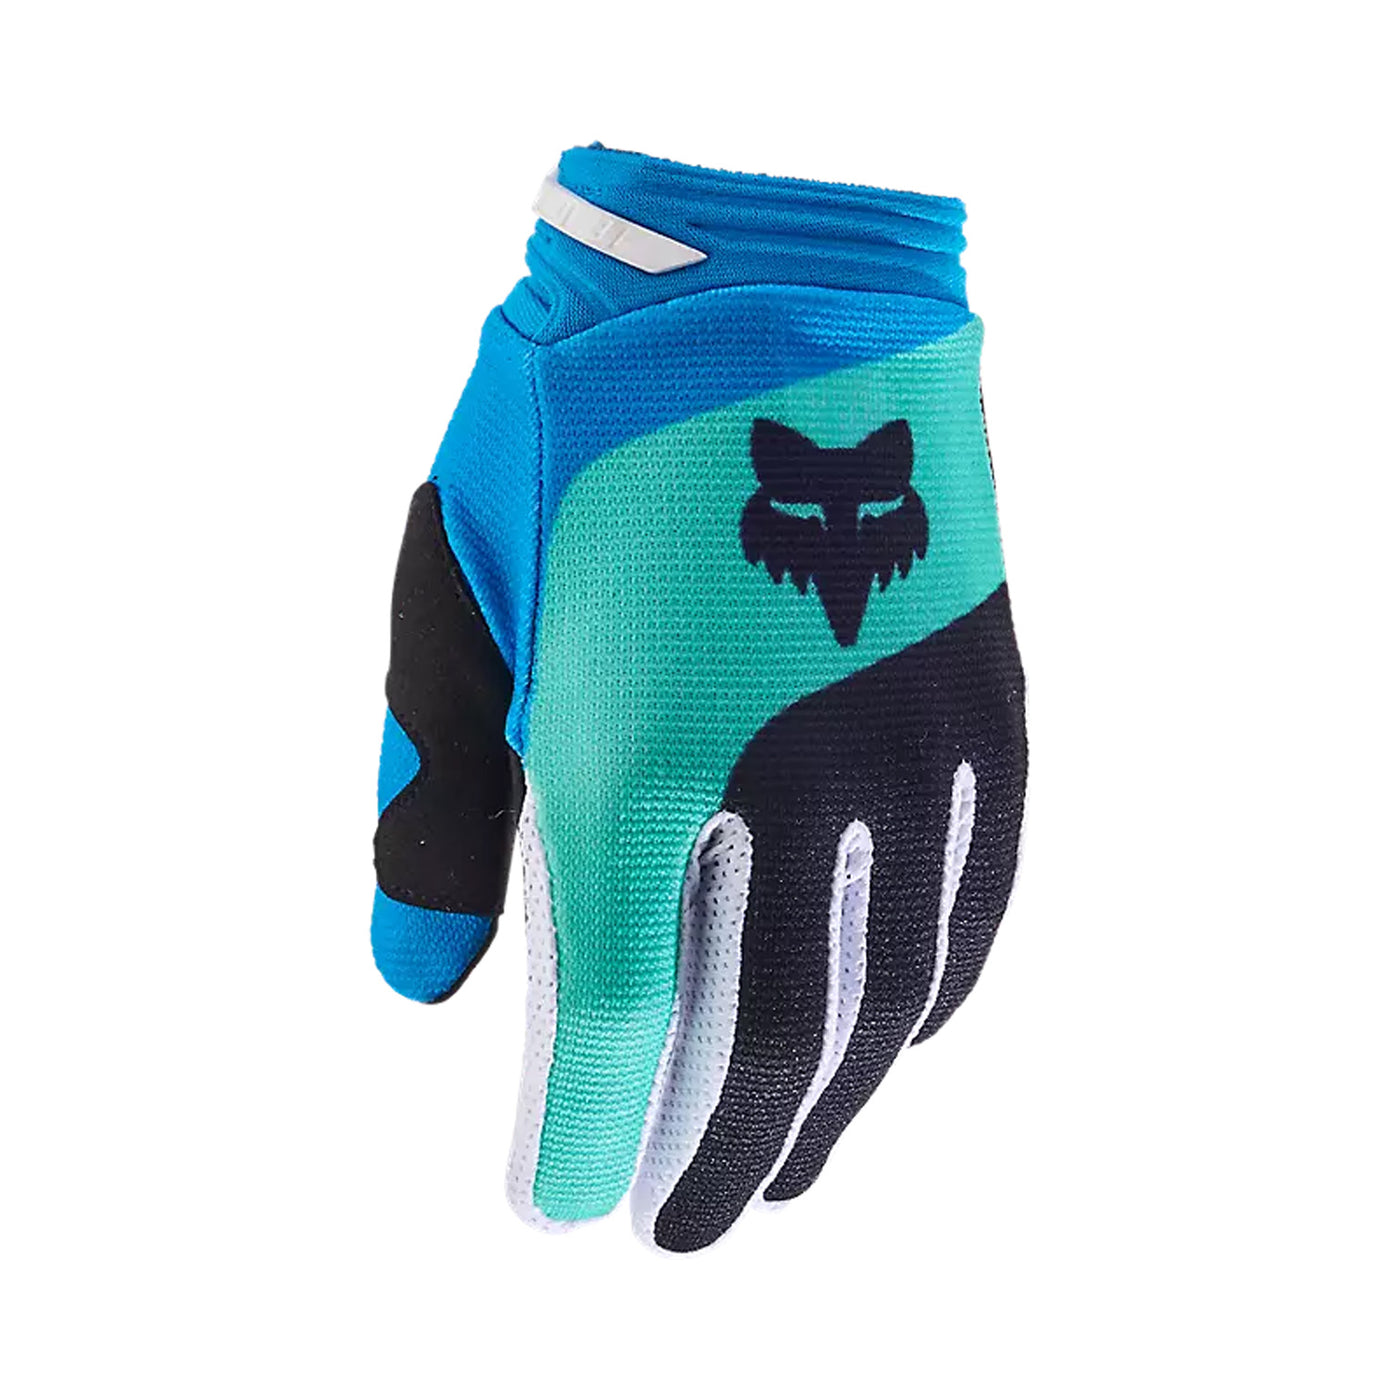 Fox Racing Youth 180 Ballast Gloves